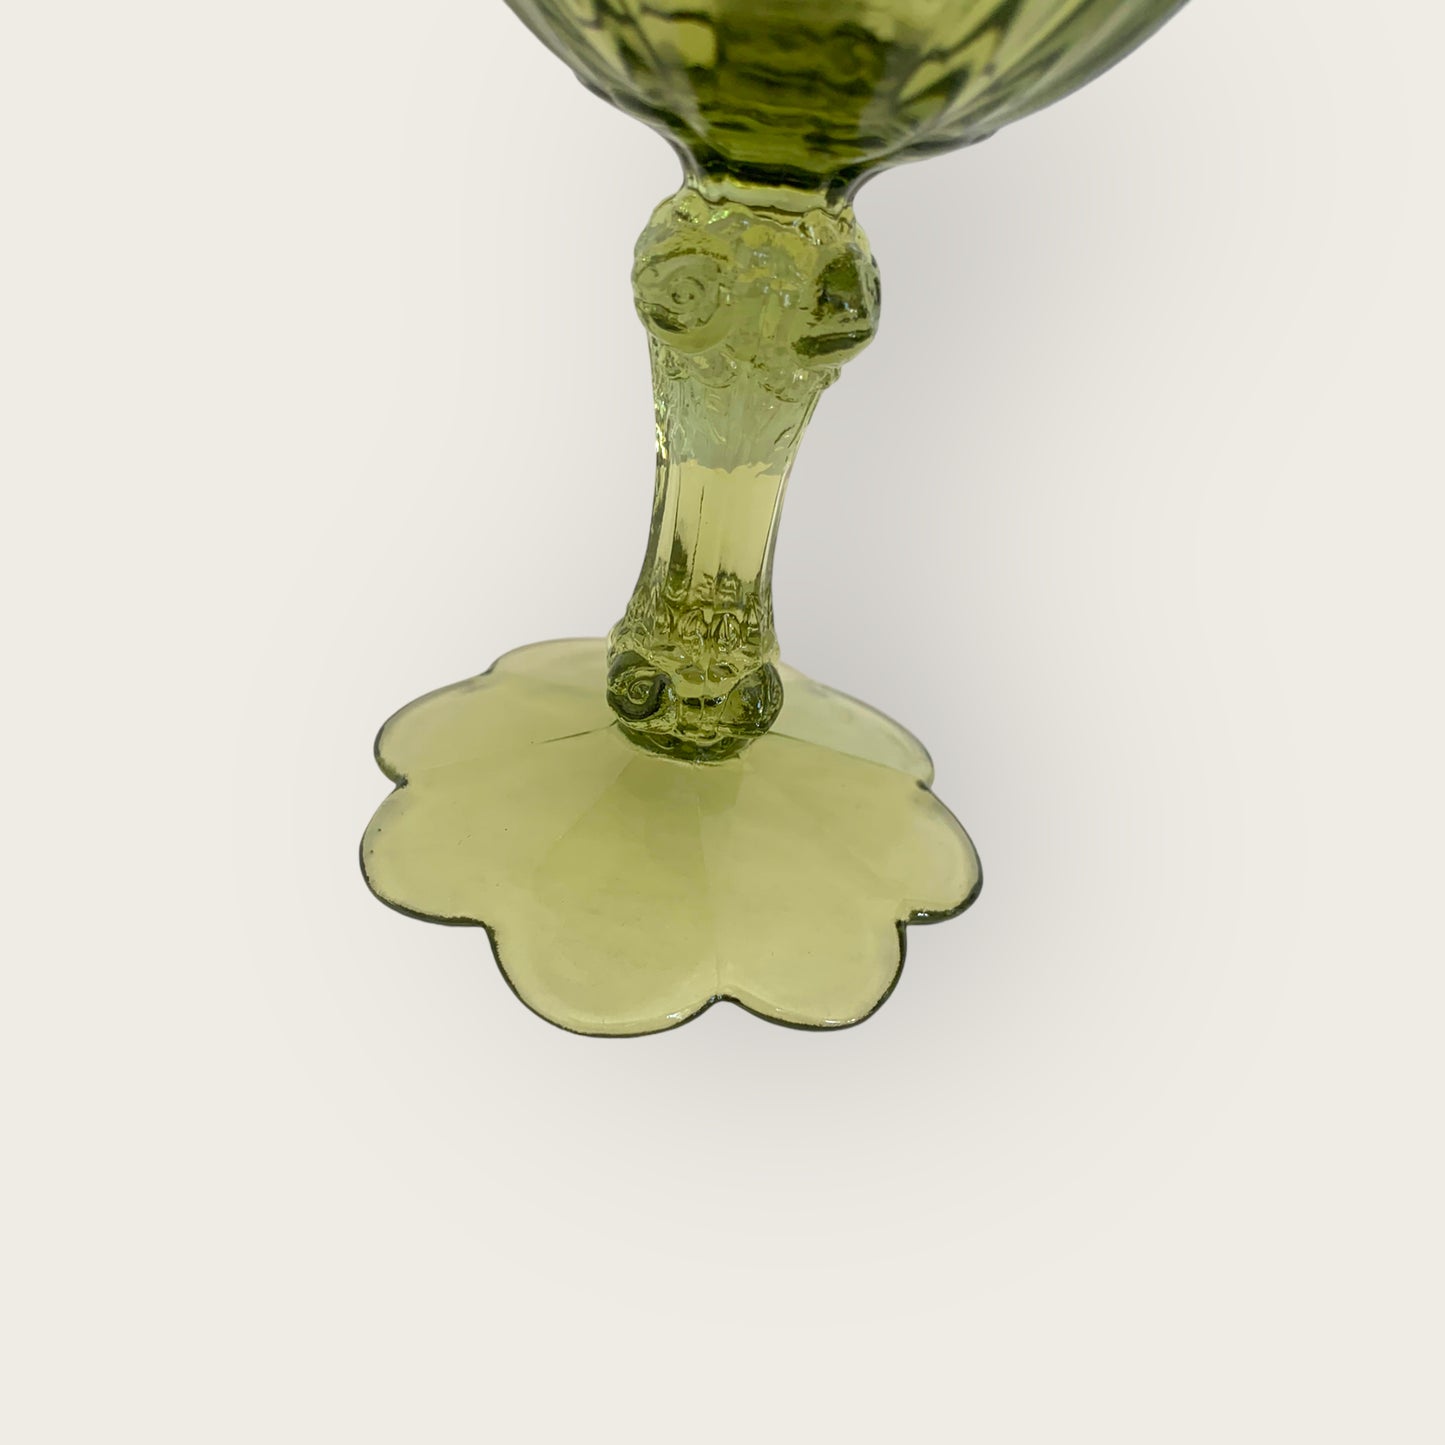 the scallop wine glass set